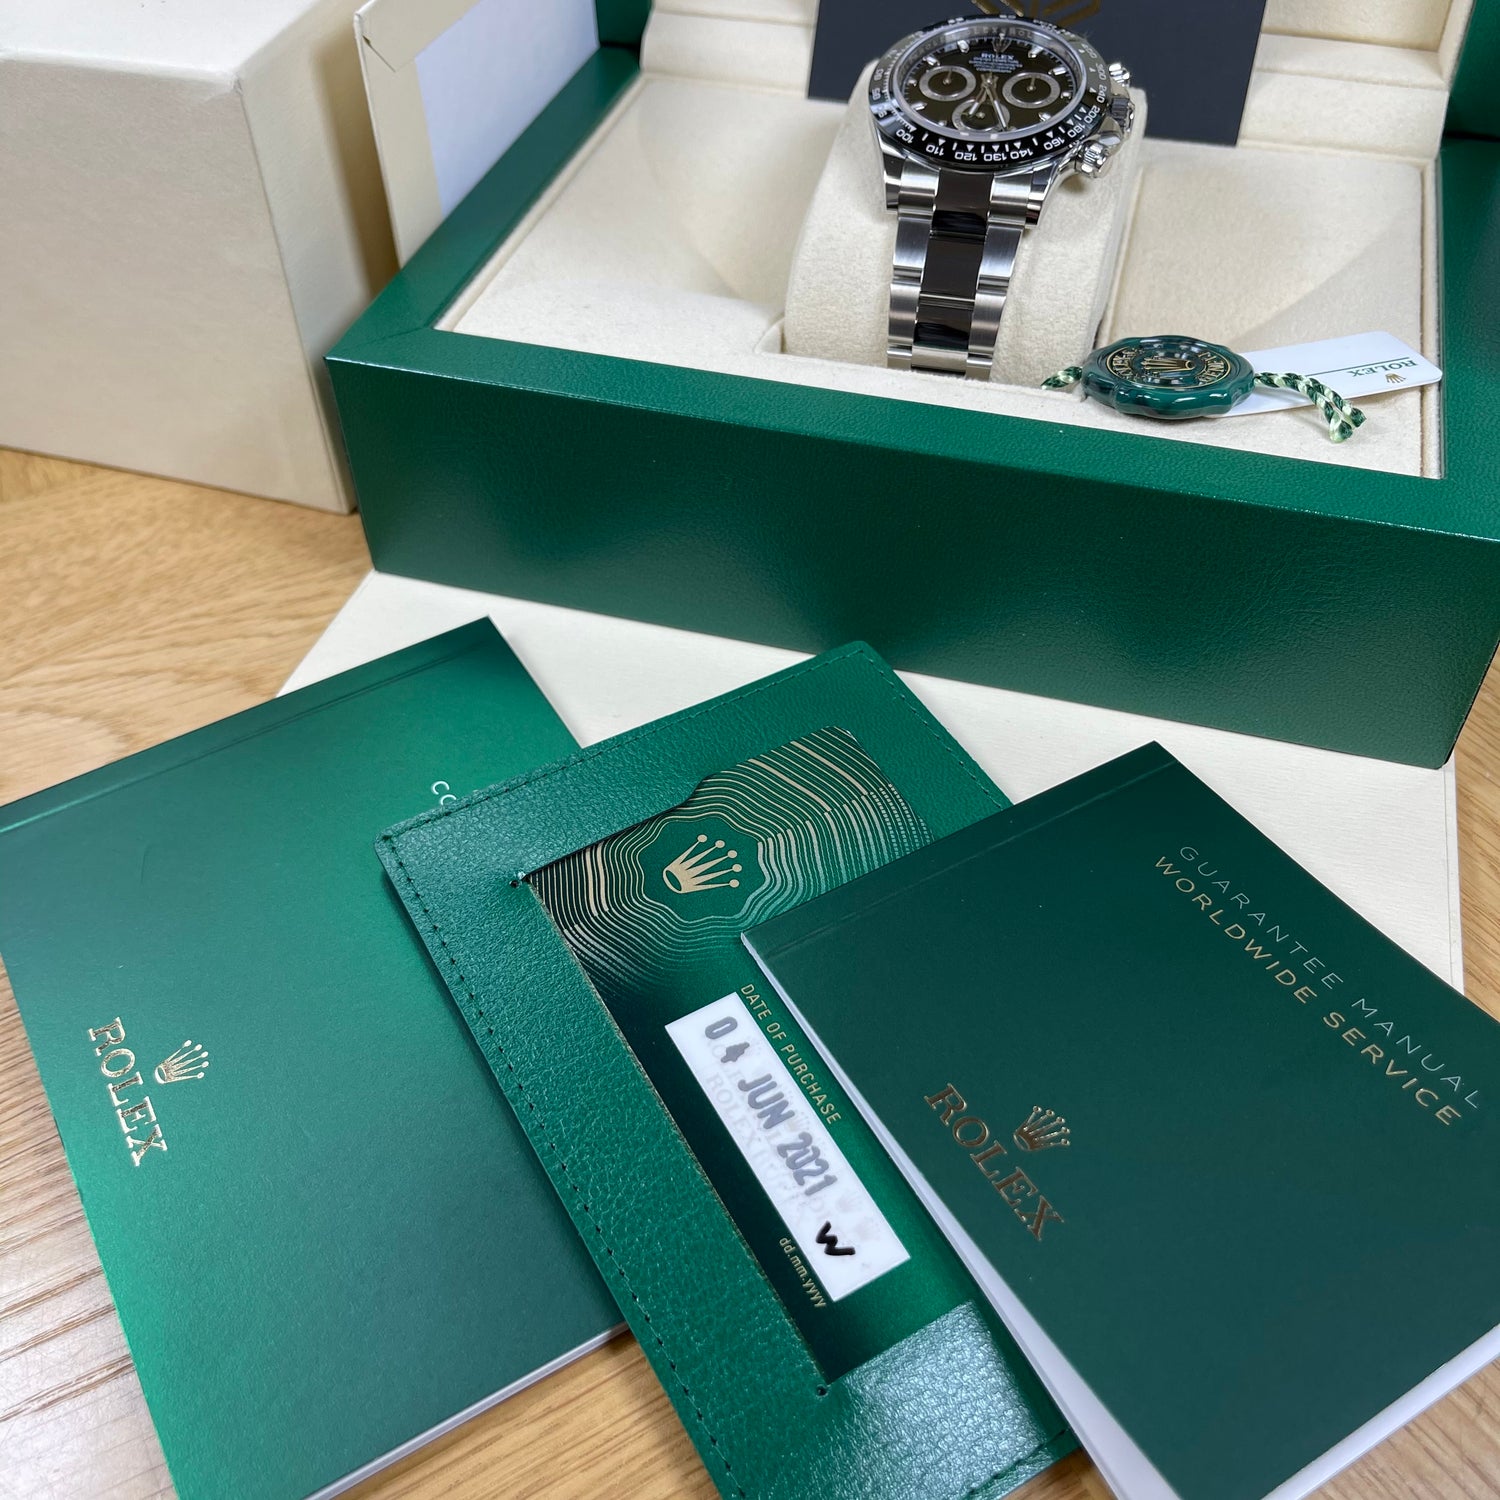 Rolex Cosmograph Daytona Ceramic Black Dial 116500LN June 2021 Brand New Watch